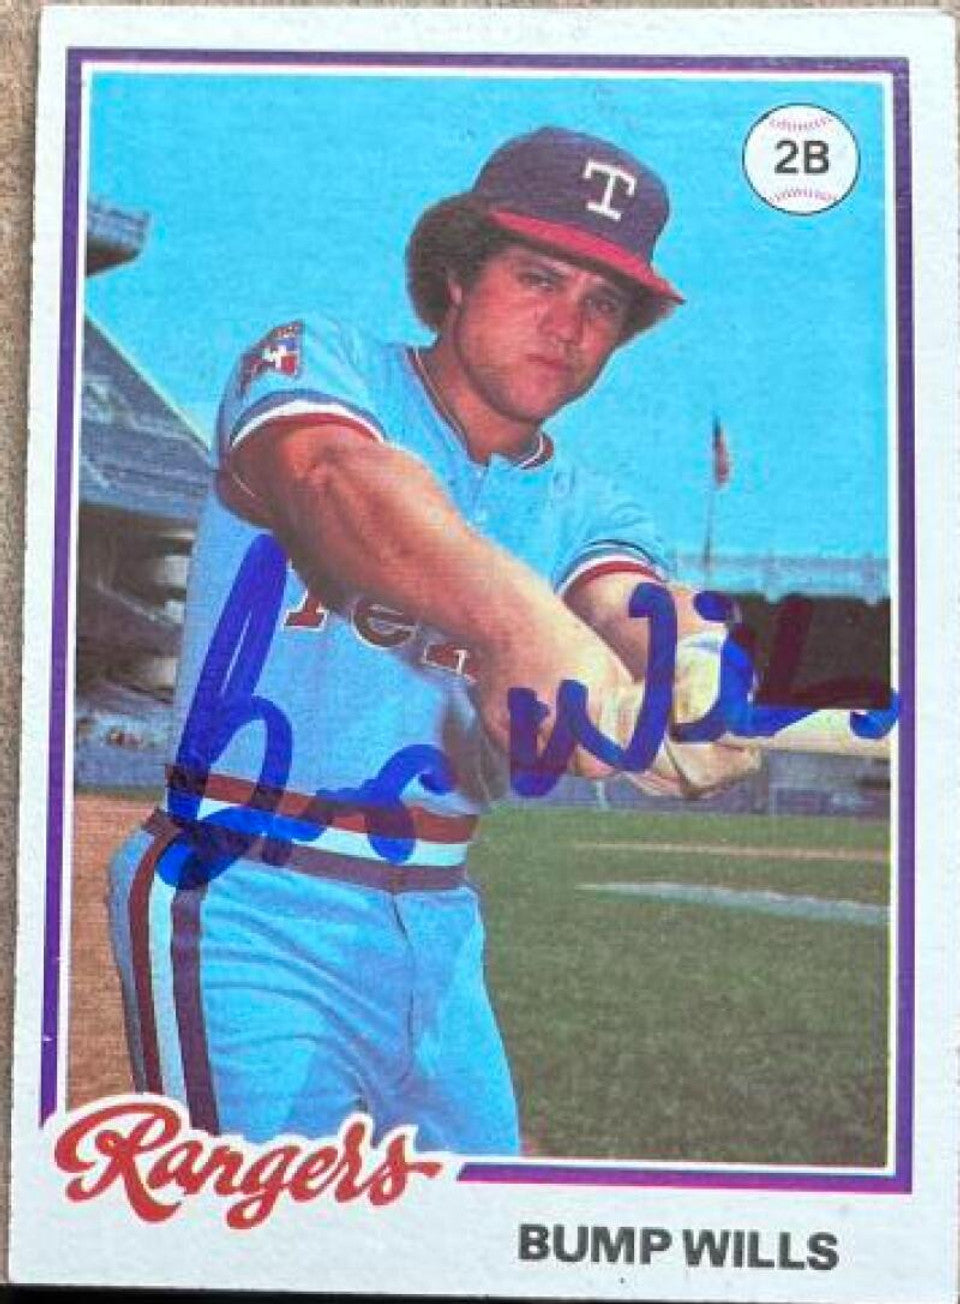 Bump Wills Signed 1978 Topps Burger King Baseball Card - Texas Rangers